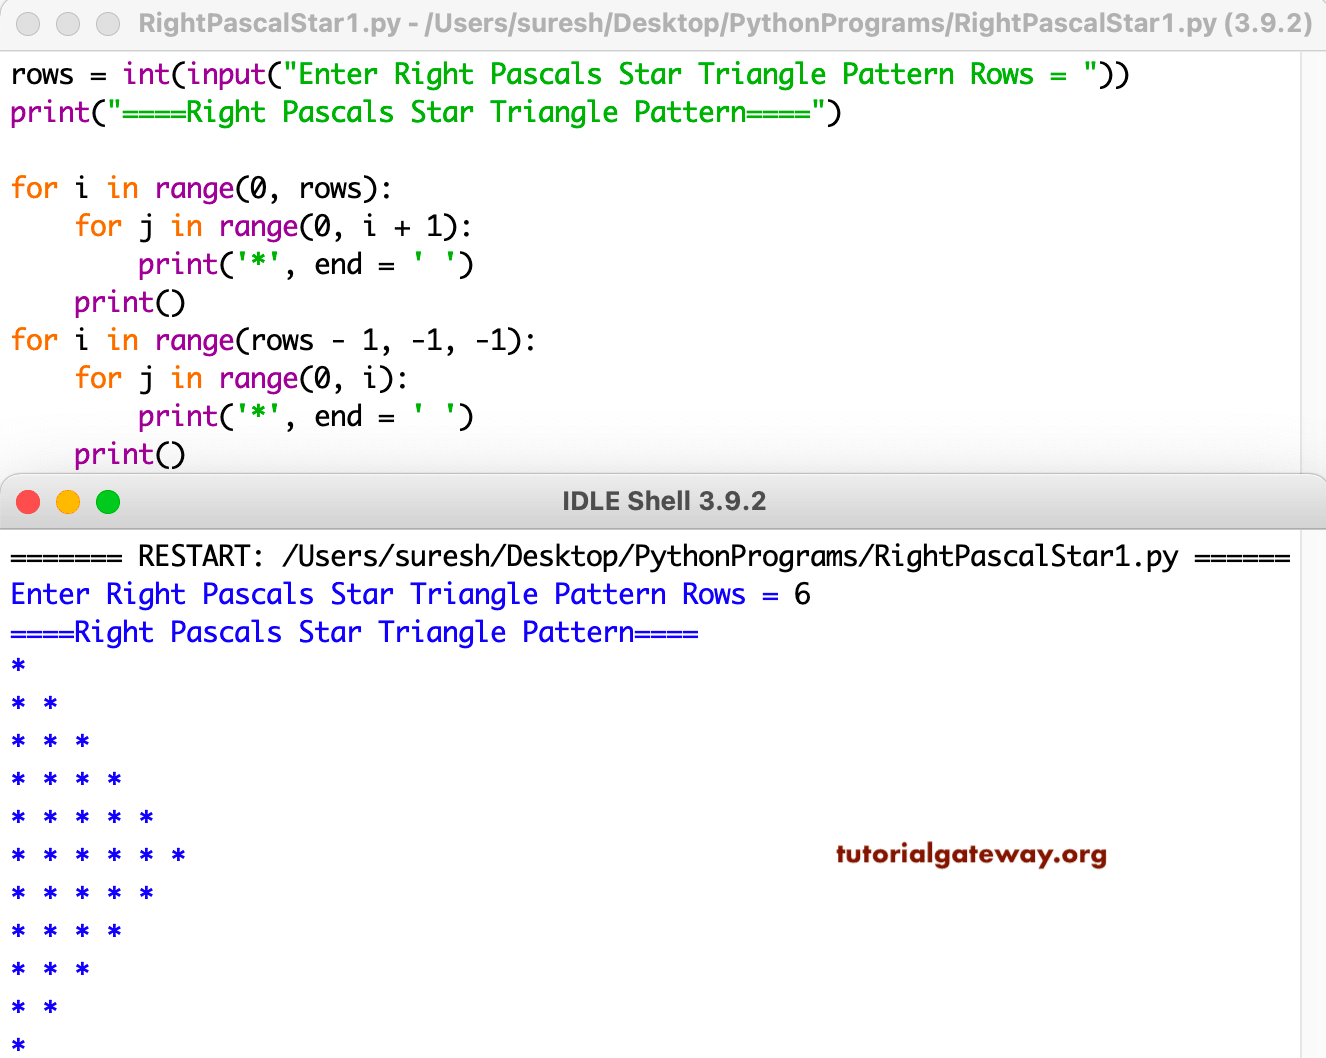 Python Program to Print Right Pascals Star Triangle